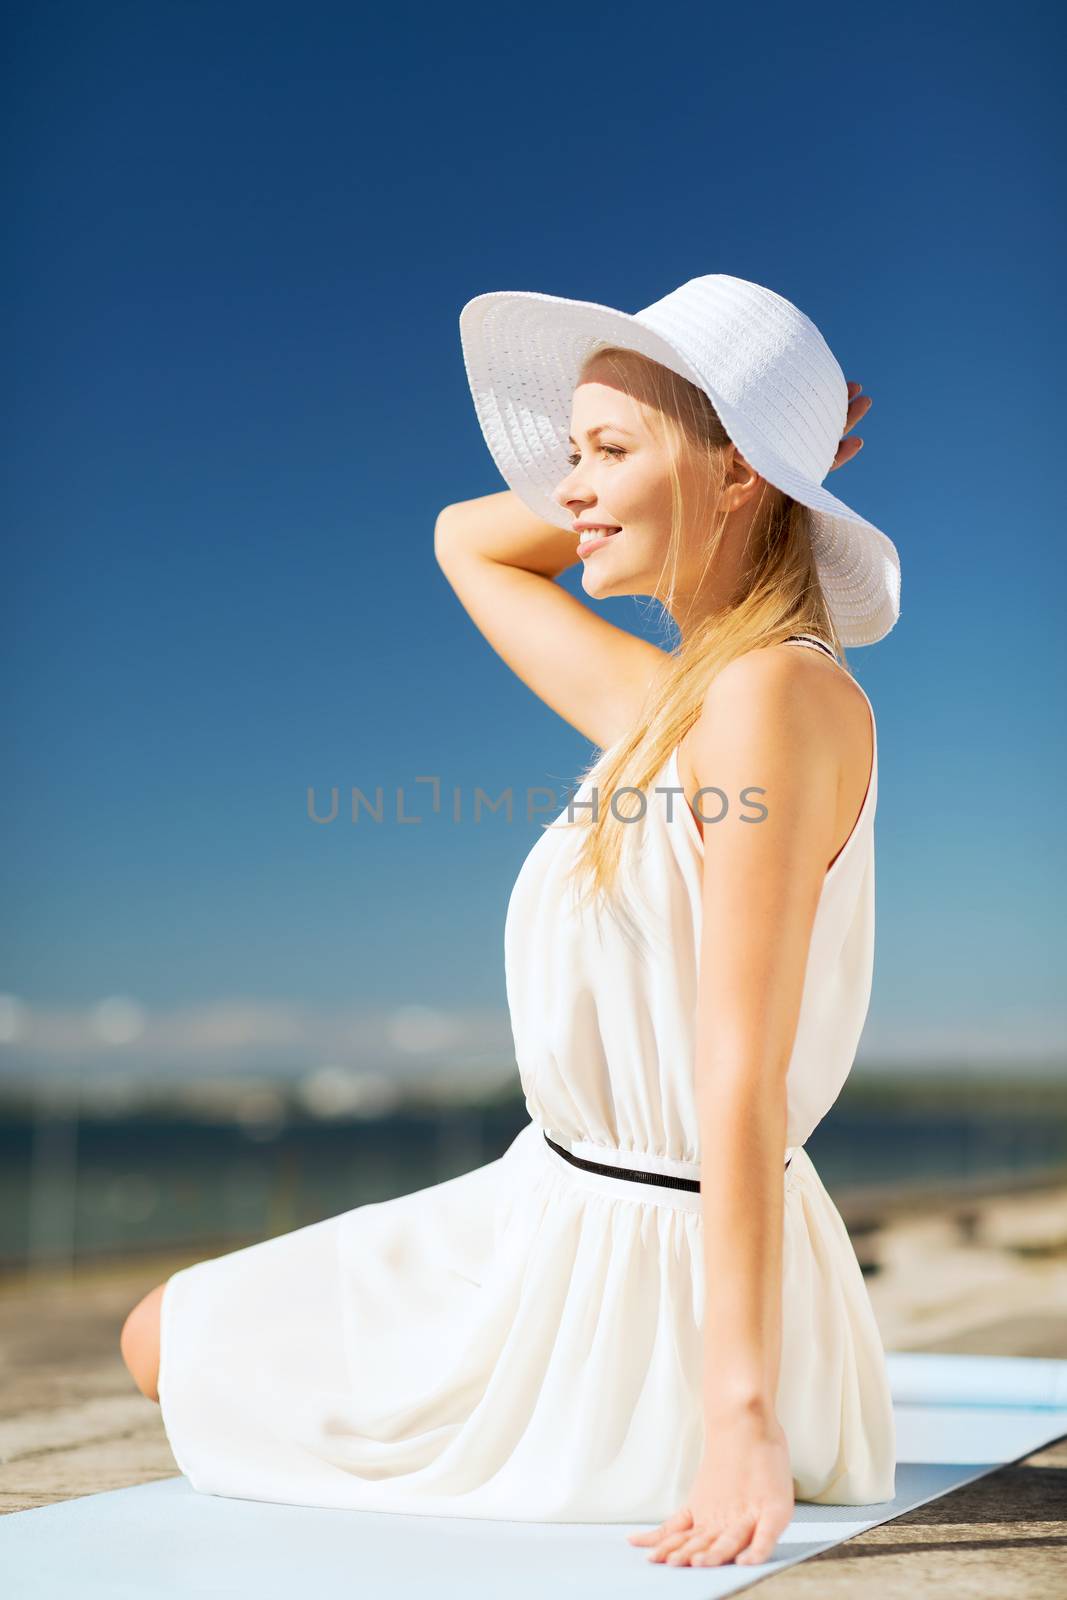 beautiful woman enjoying summer outdoors by dolgachov